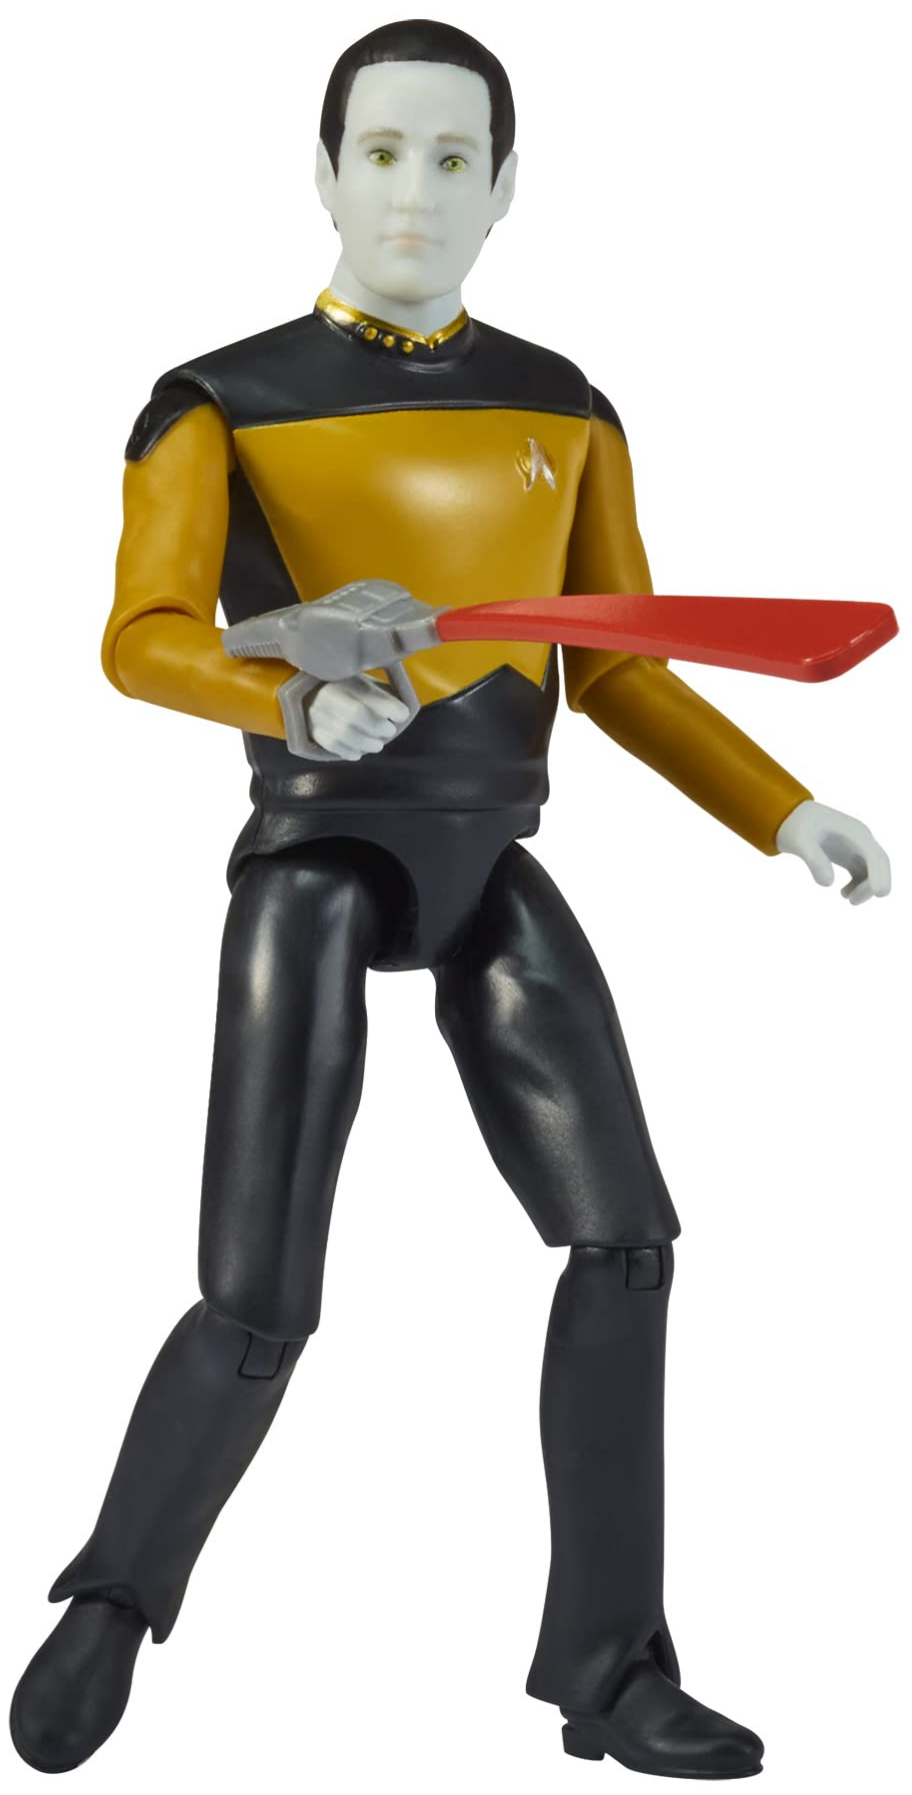 Star Trek Playmates Toys Universe: 5" Lt. Commander Data “Next Generation” Action Figure with Accessories, Multi - $7.67